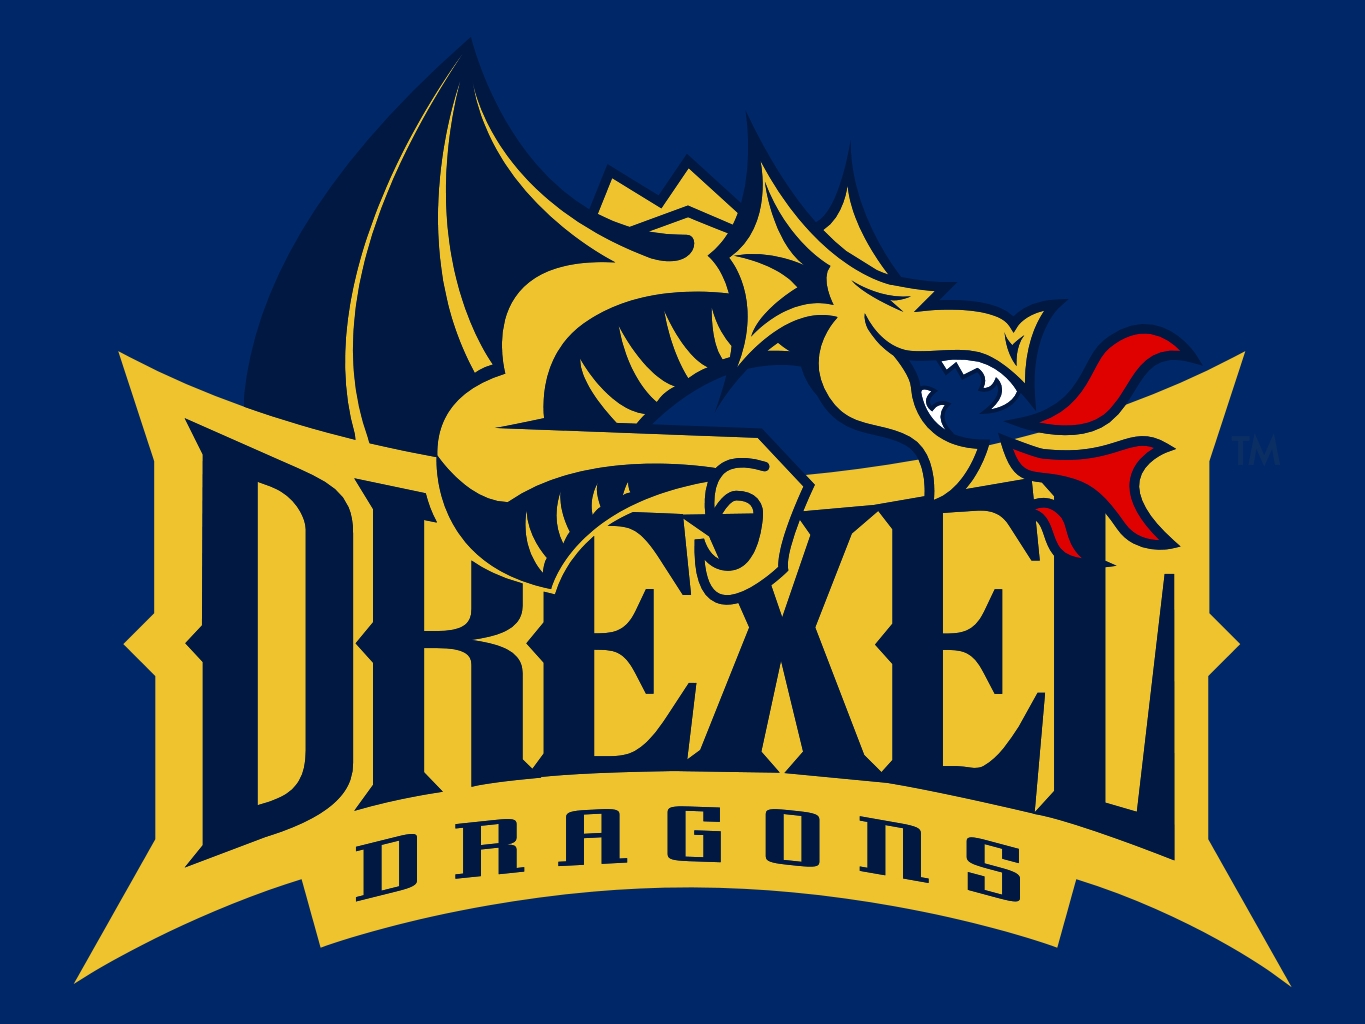 drexel university logo